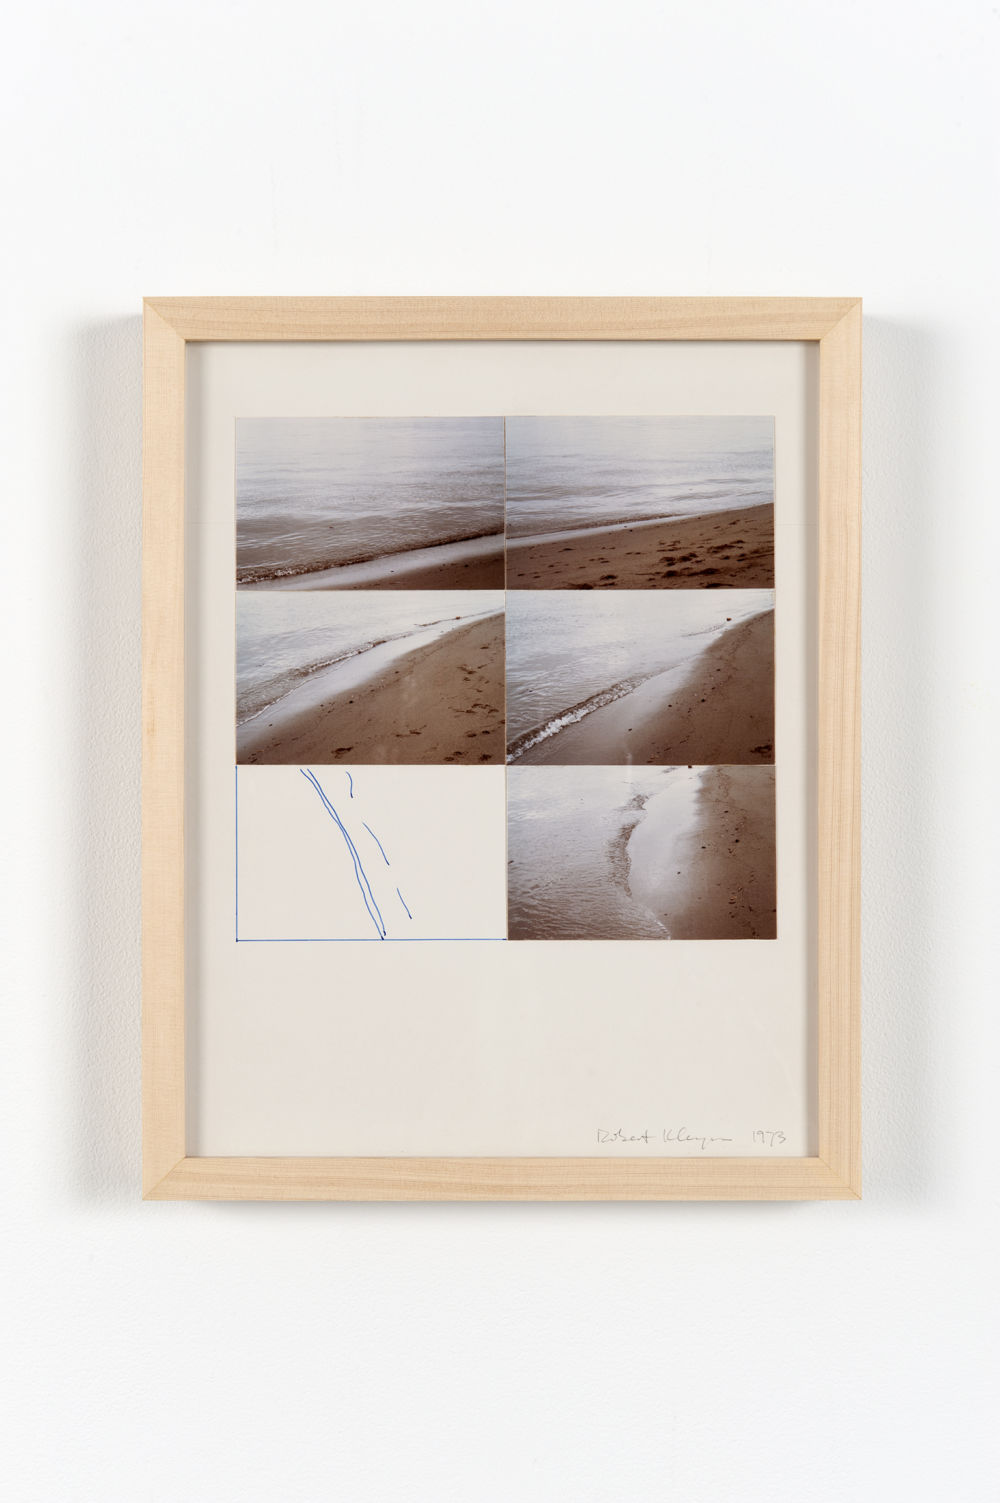 ​Robert Kleyn, Shoreline, 1973, photographs and ink on cardstock, 15 x 12 in. (39 x 31 cm) by 